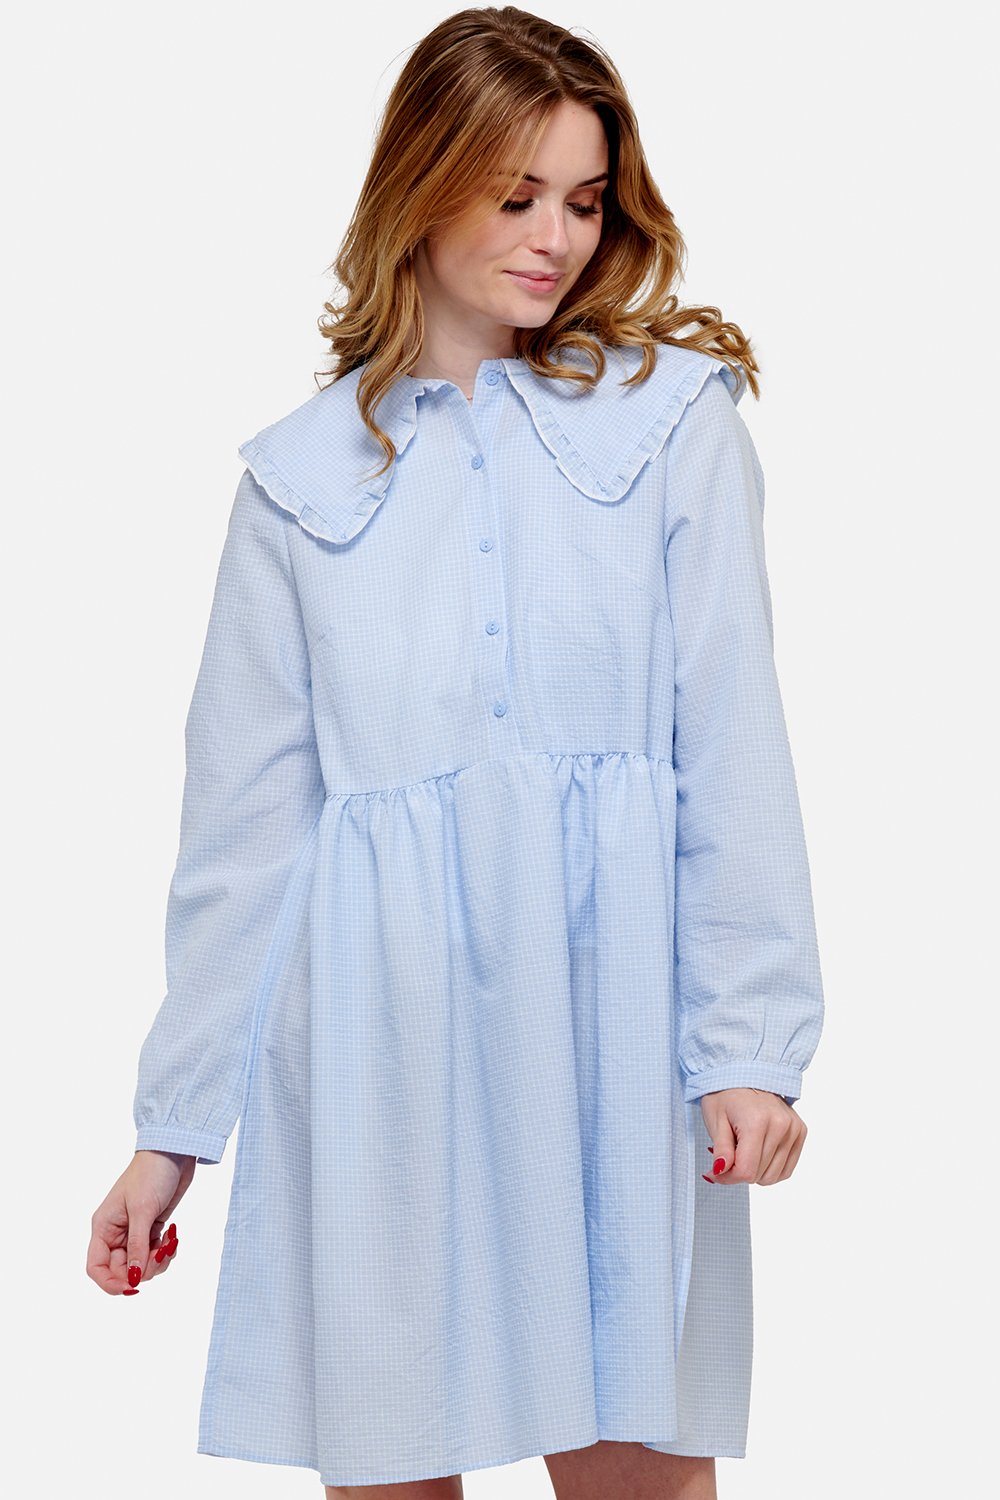 Dania Dress Cotton Blue/white Checks